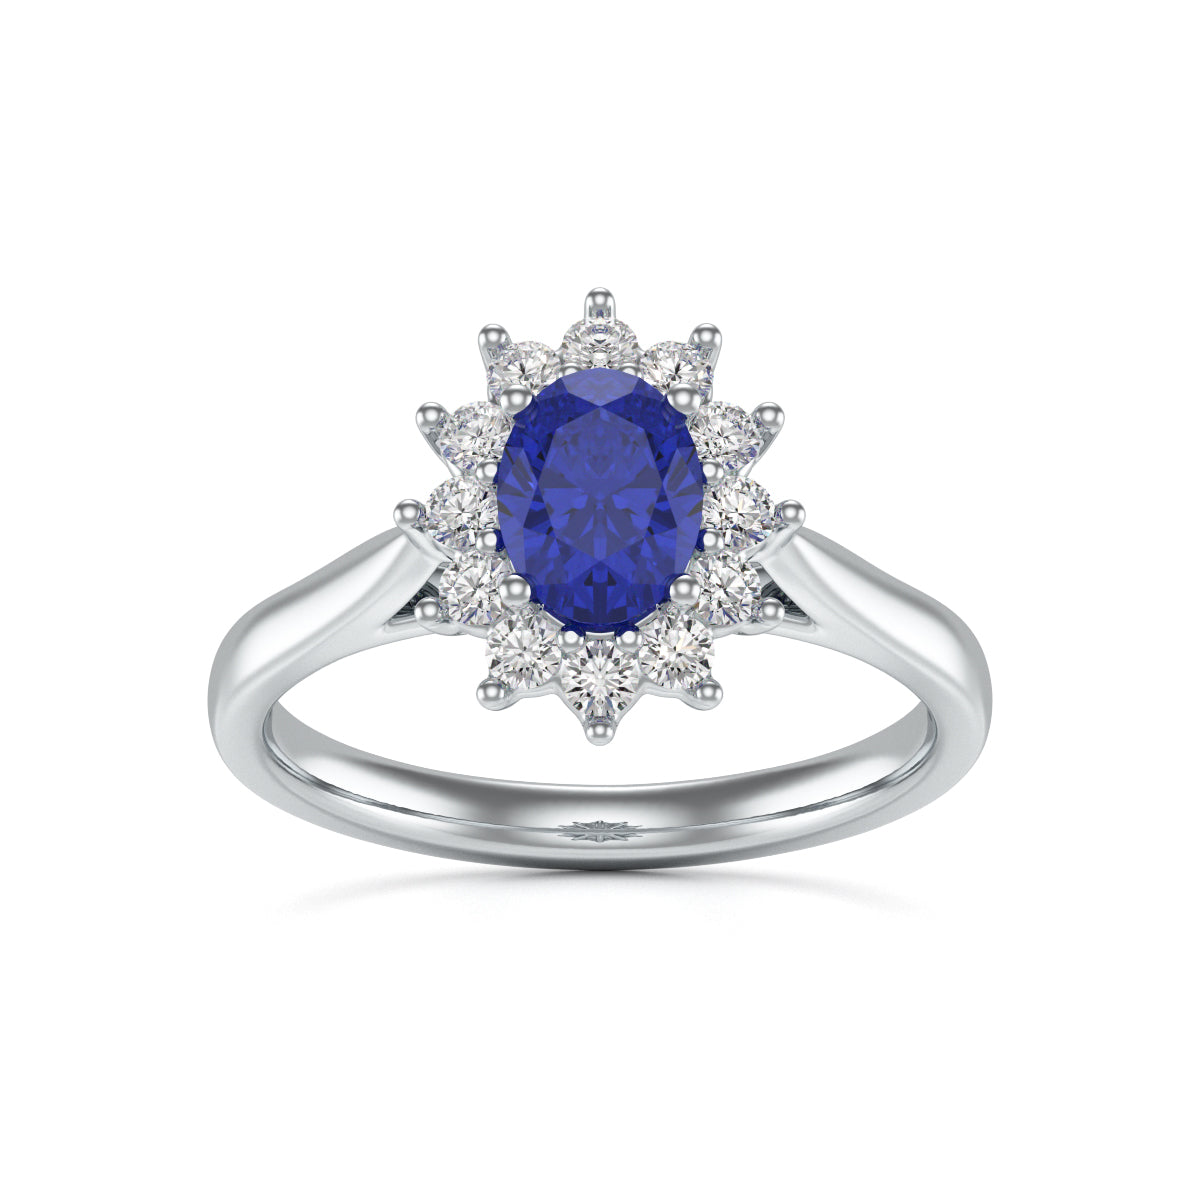 Oval Blue Sapphire Diamond Halo Ring